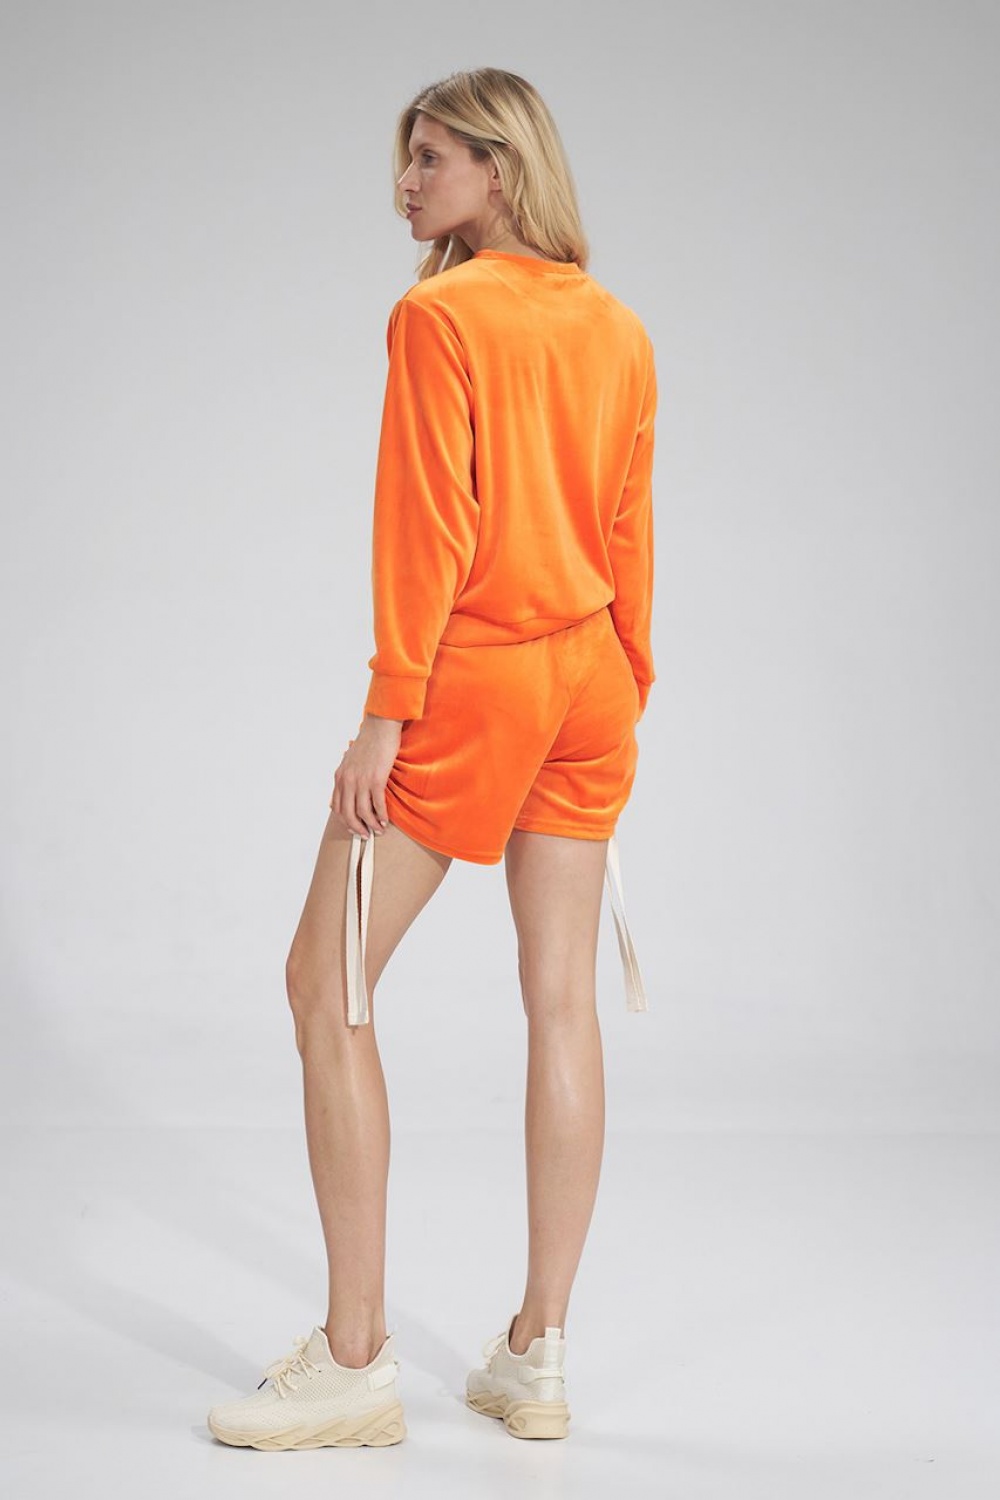  Sweatshirt model 154668 Figl  orange